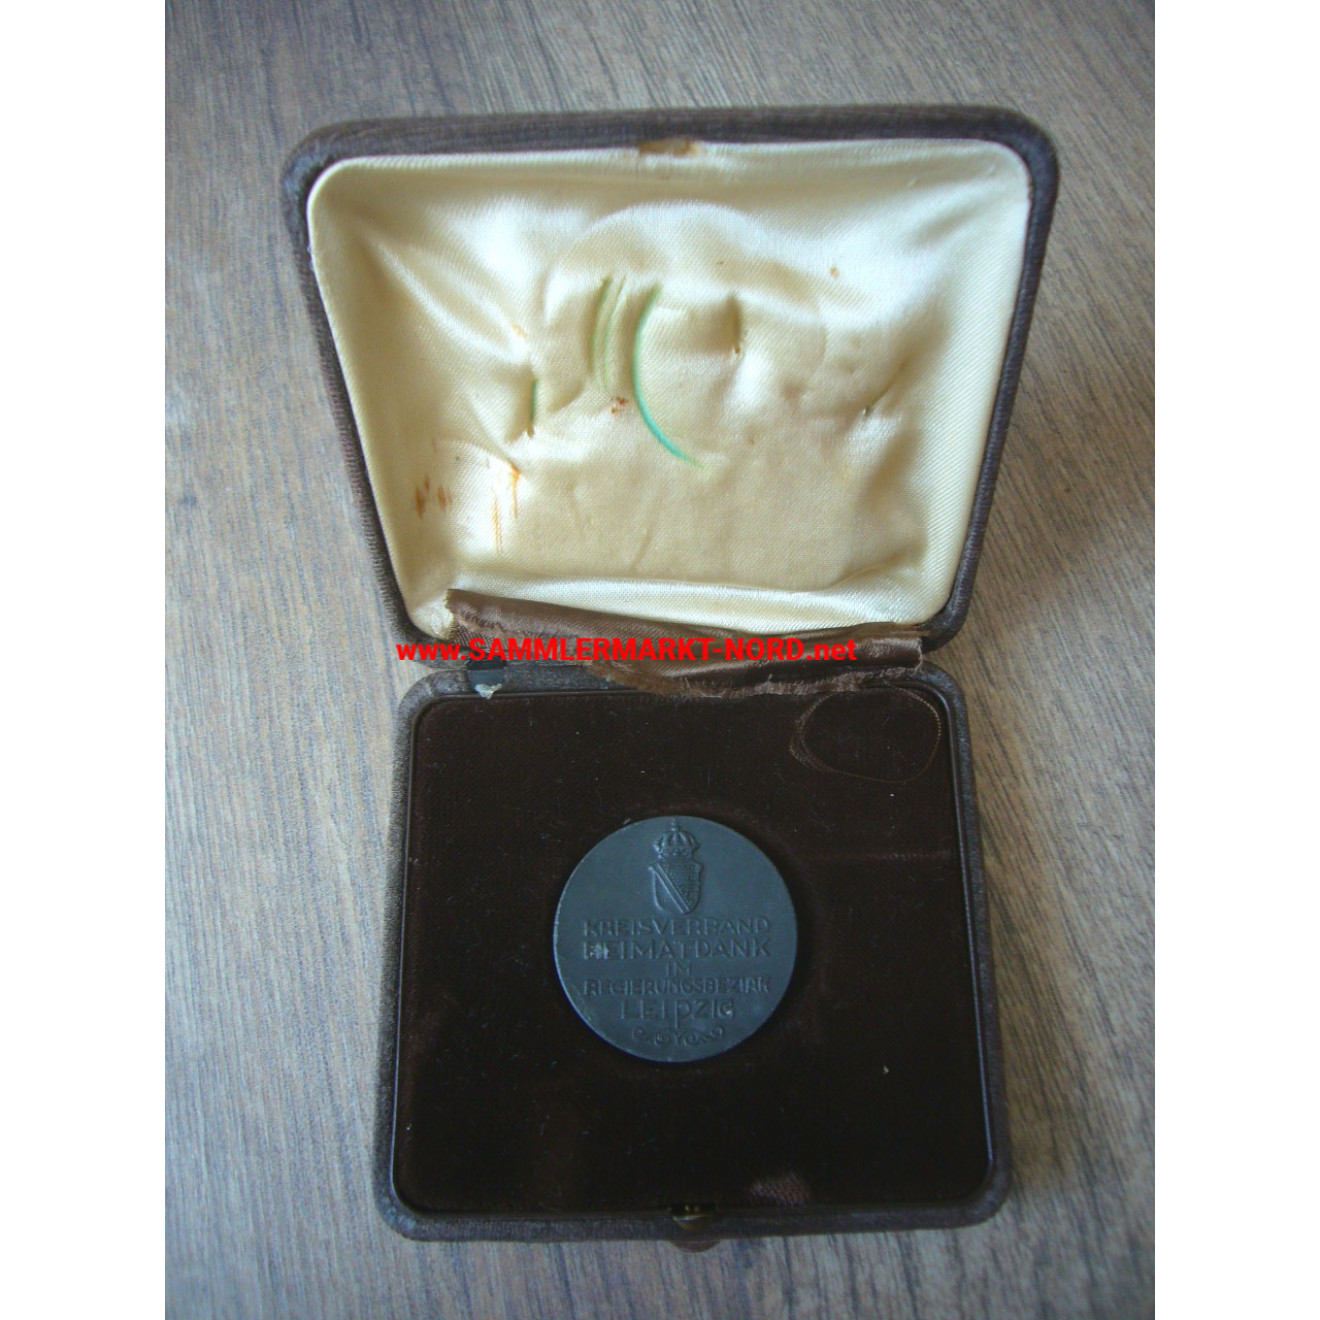 City of Leipzig, Saxony - District Association Heimatdank - Medal 1917 in case